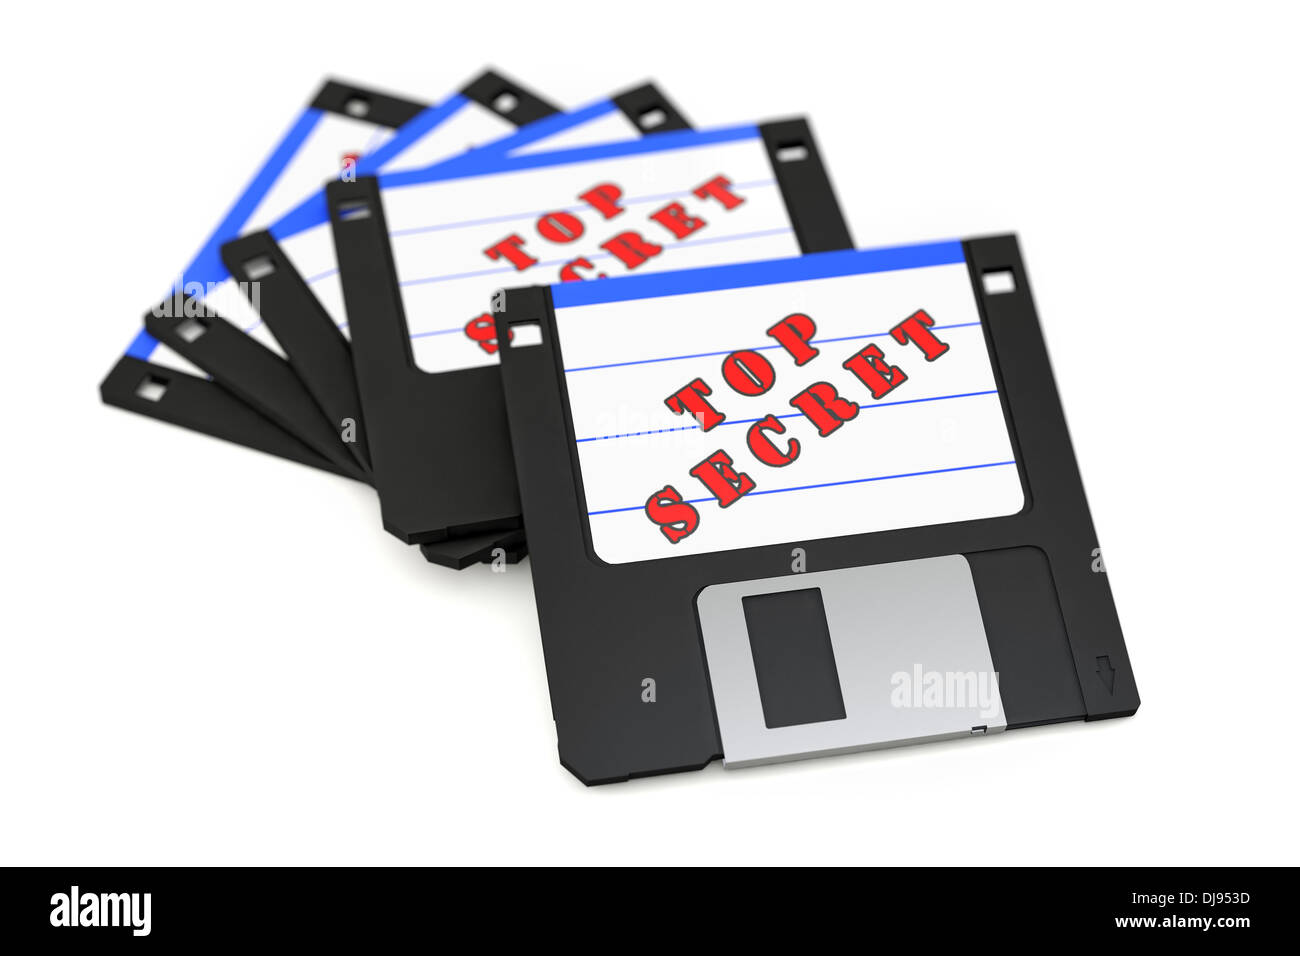 Stack of floppy disks isolated on white - 3D illustration Stock Photo